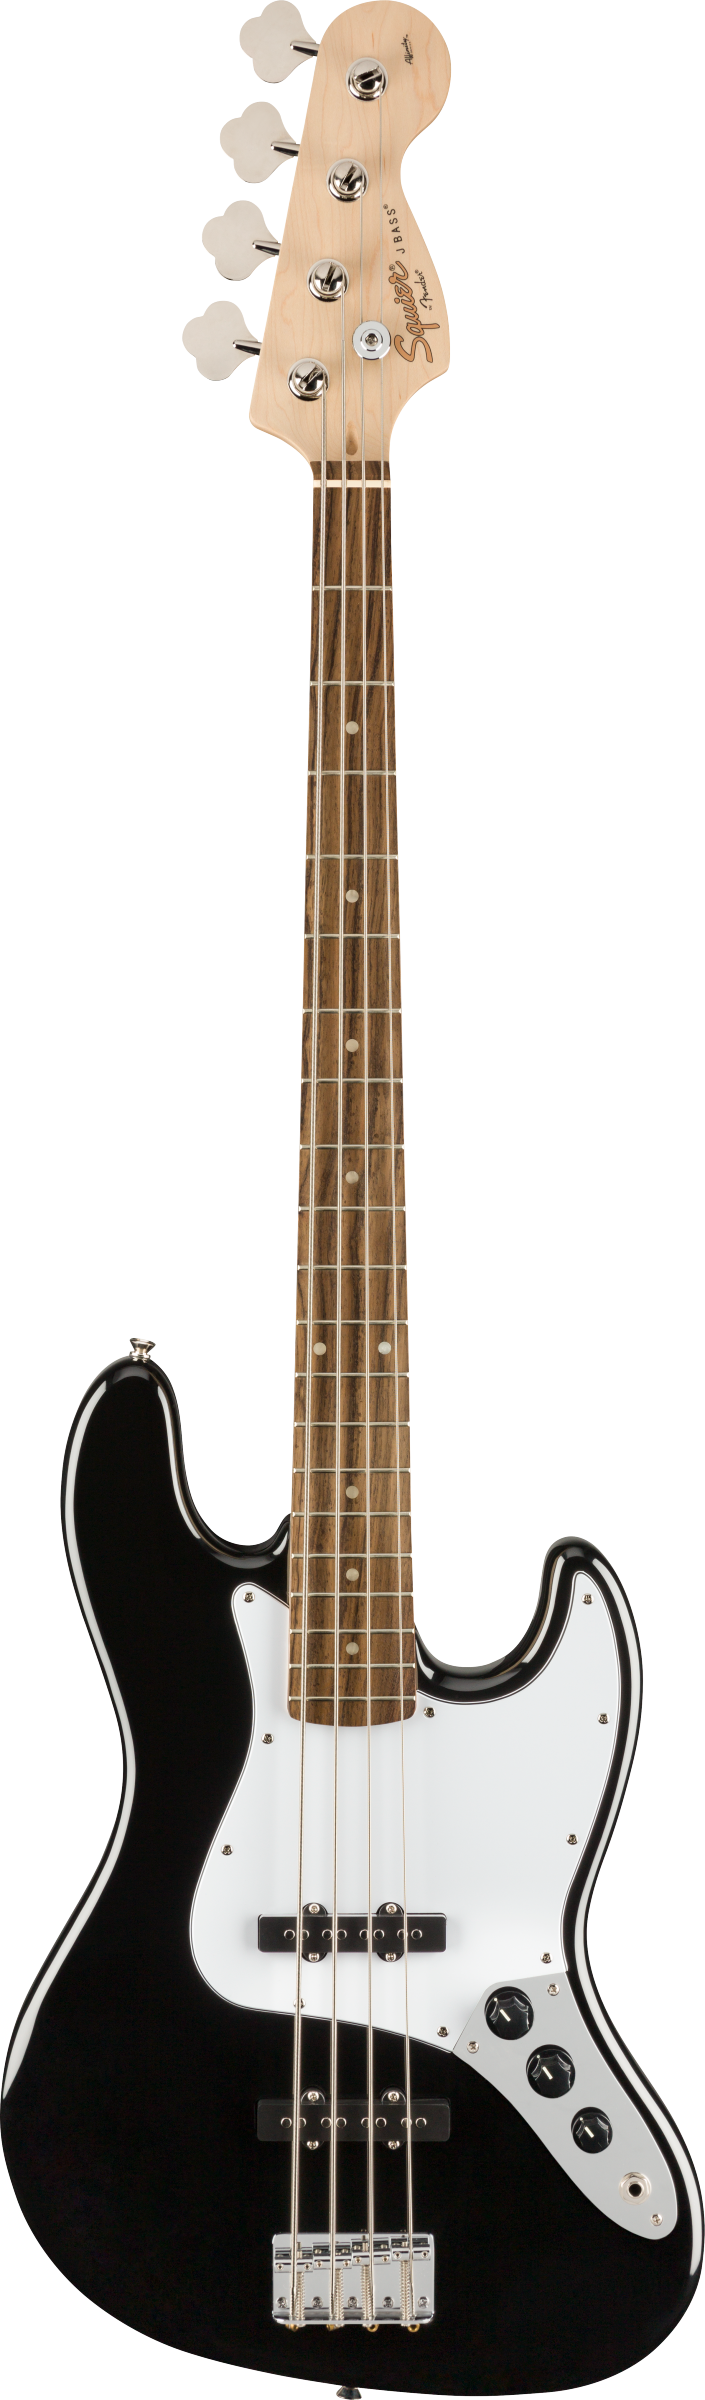 Affinity Series Jazz Bass, Laurel Fingerboard, Black